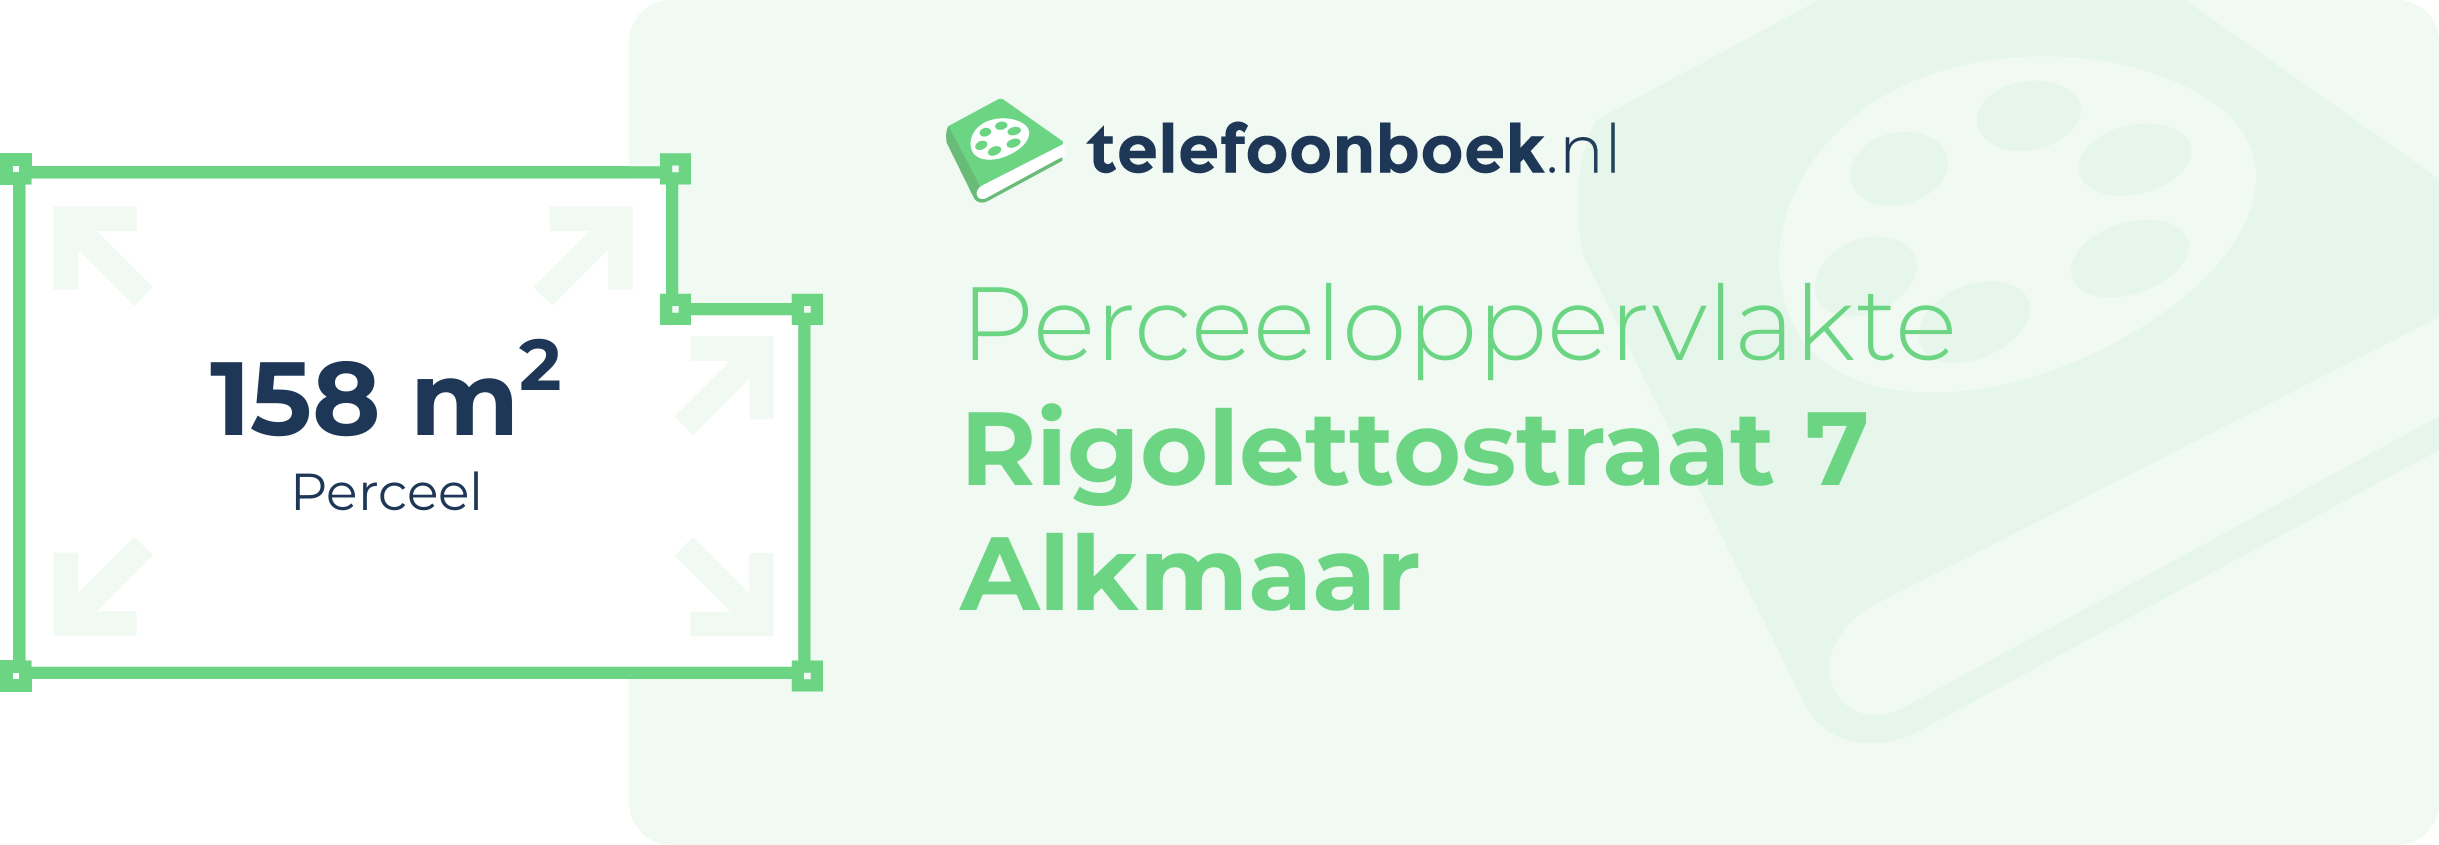 Perceeloppervlakte Rigolettostraat 7 Alkmaar